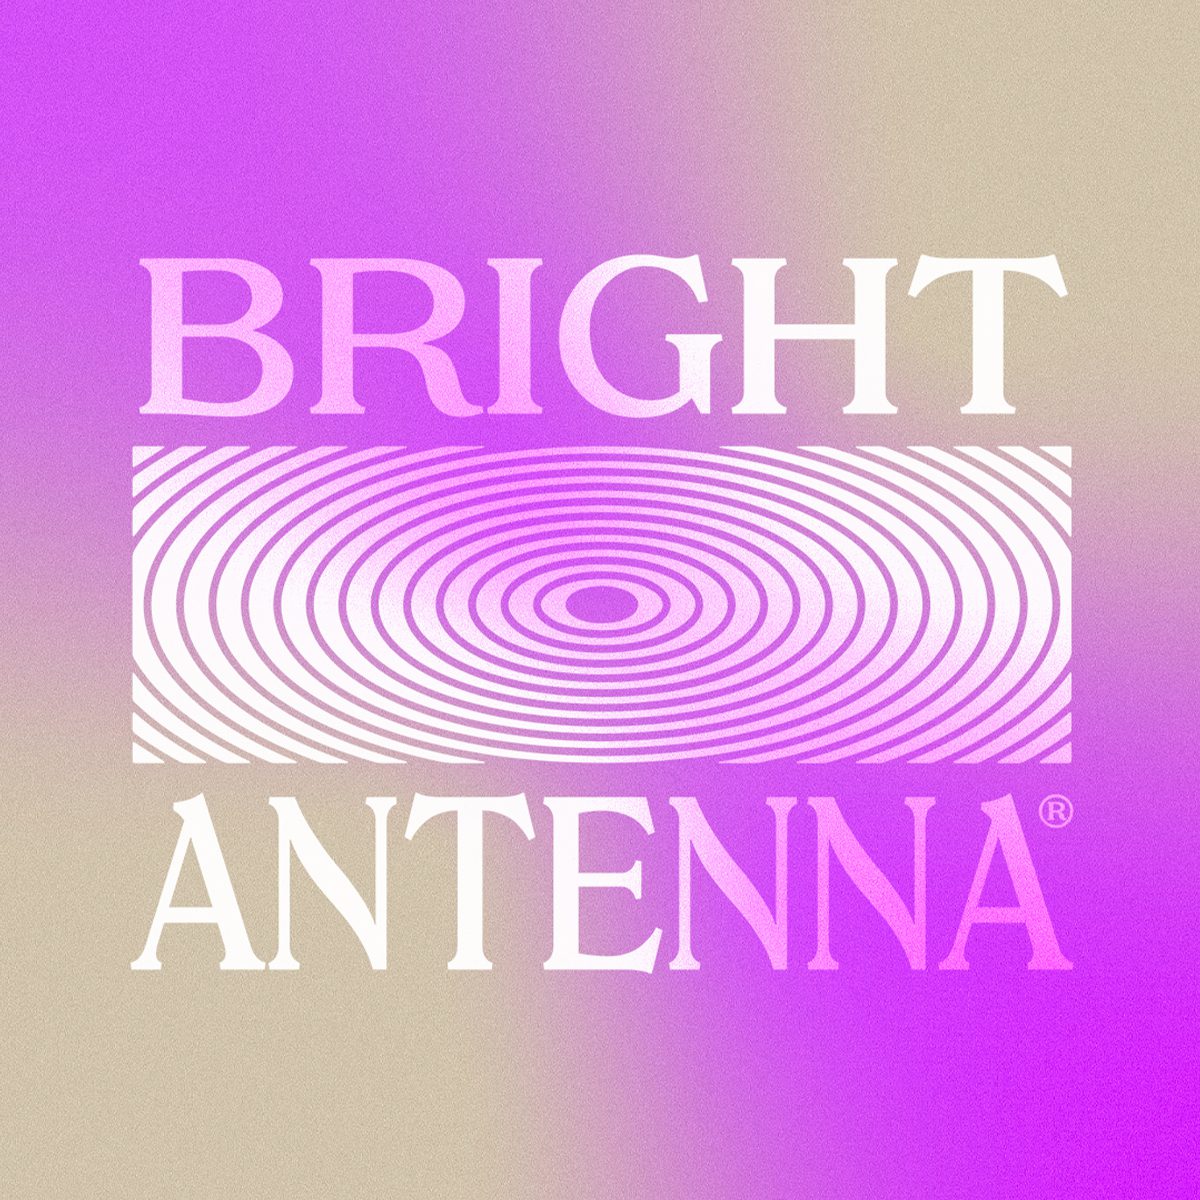 Bright Antenna